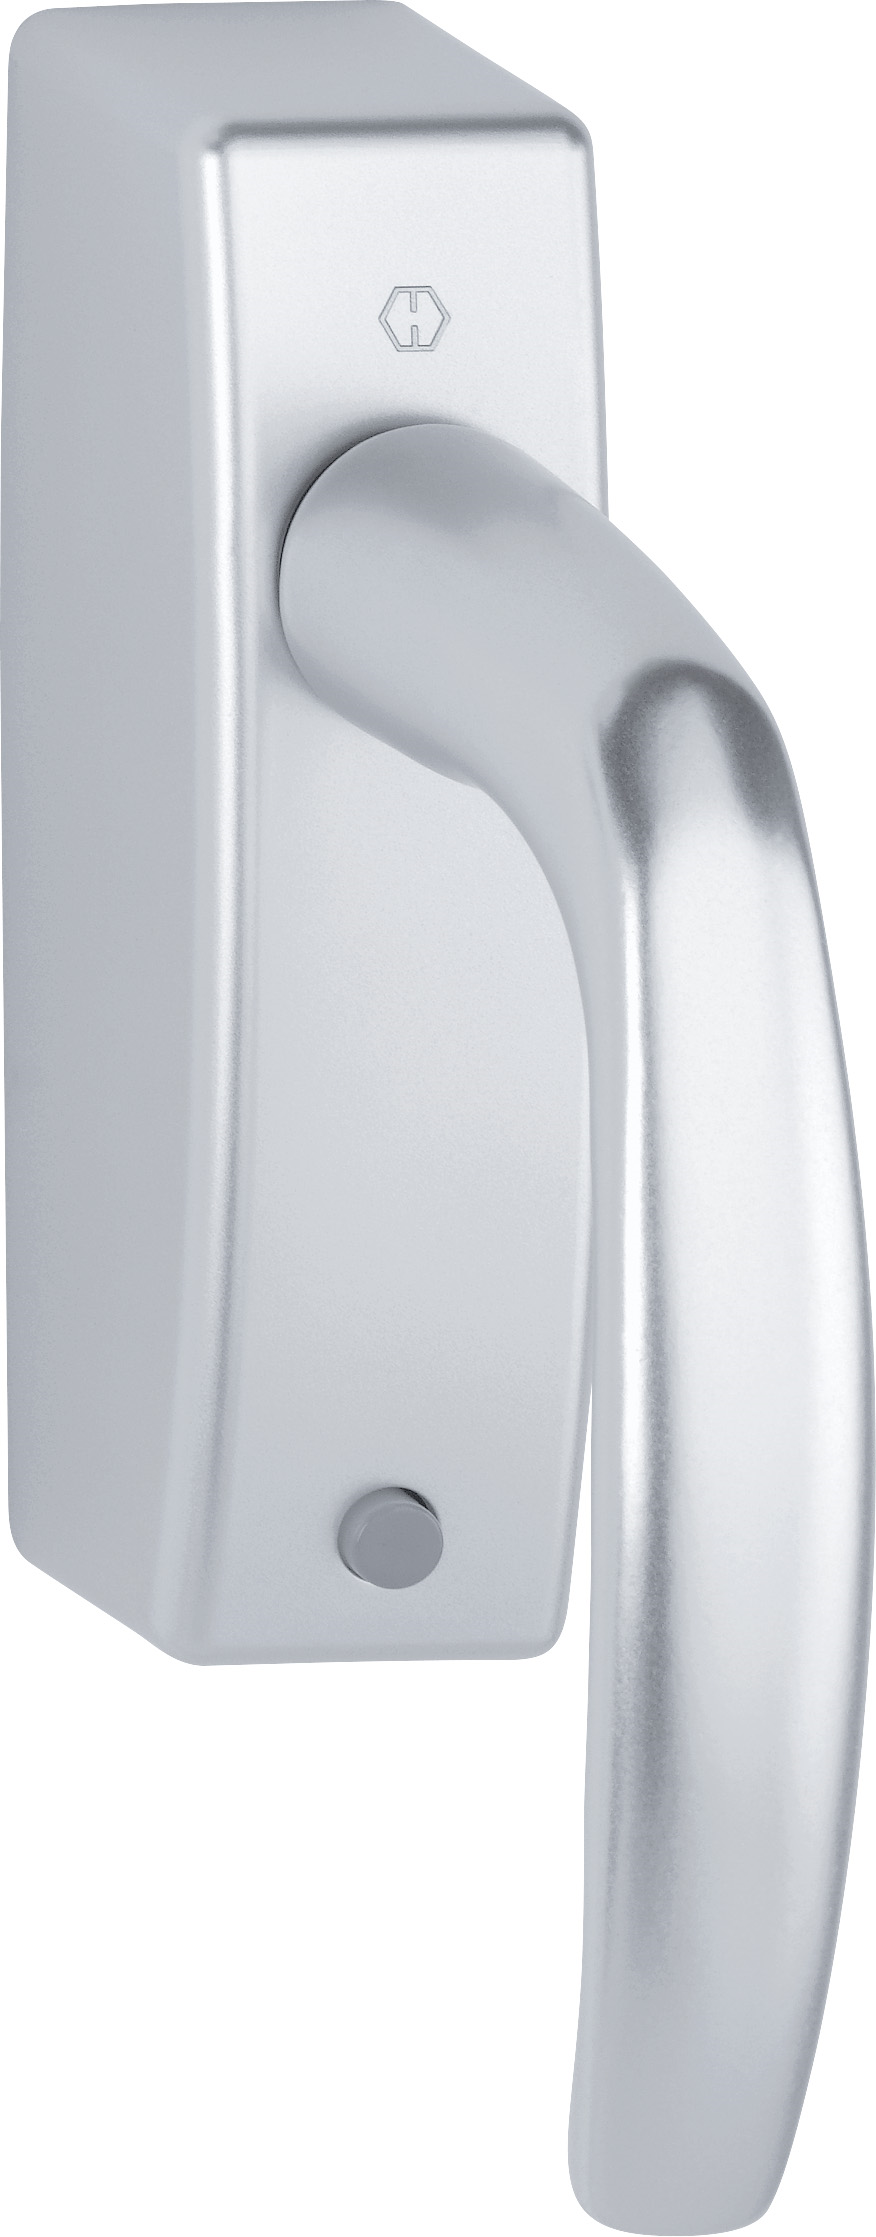 AutoLock eWindow handgreep Atlanta aluminium zilver, 24 mm pin, bidirectioneel